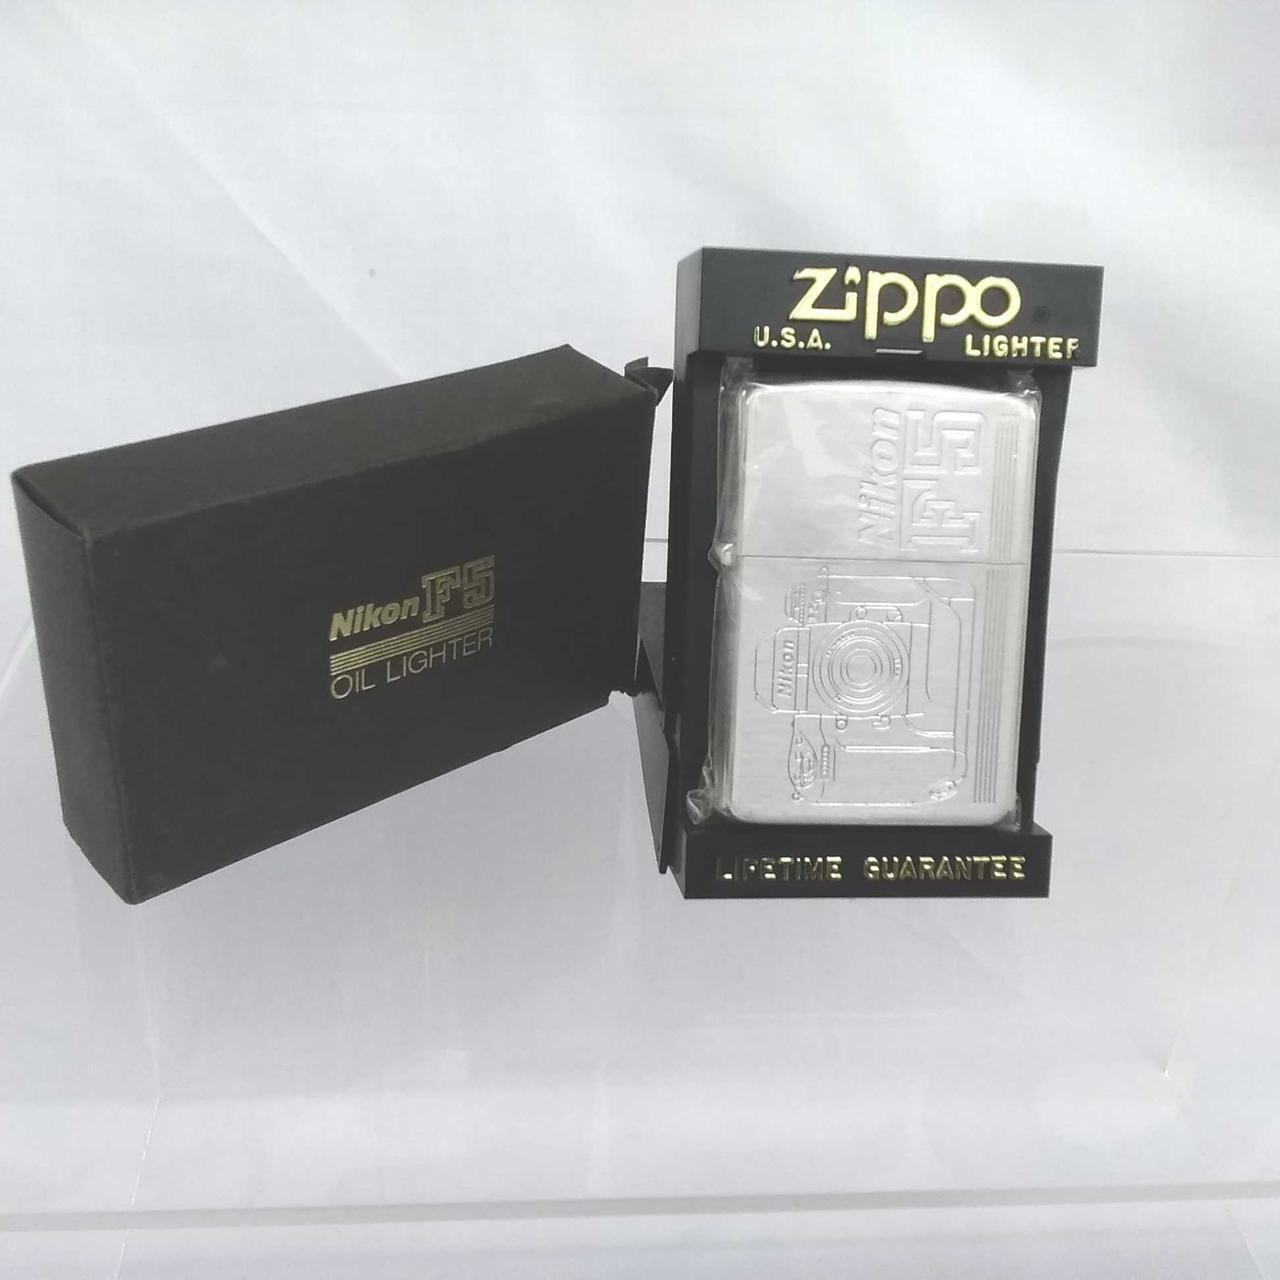 Zippo Oil lighter model number Nikon F5 release commemorative limited edition